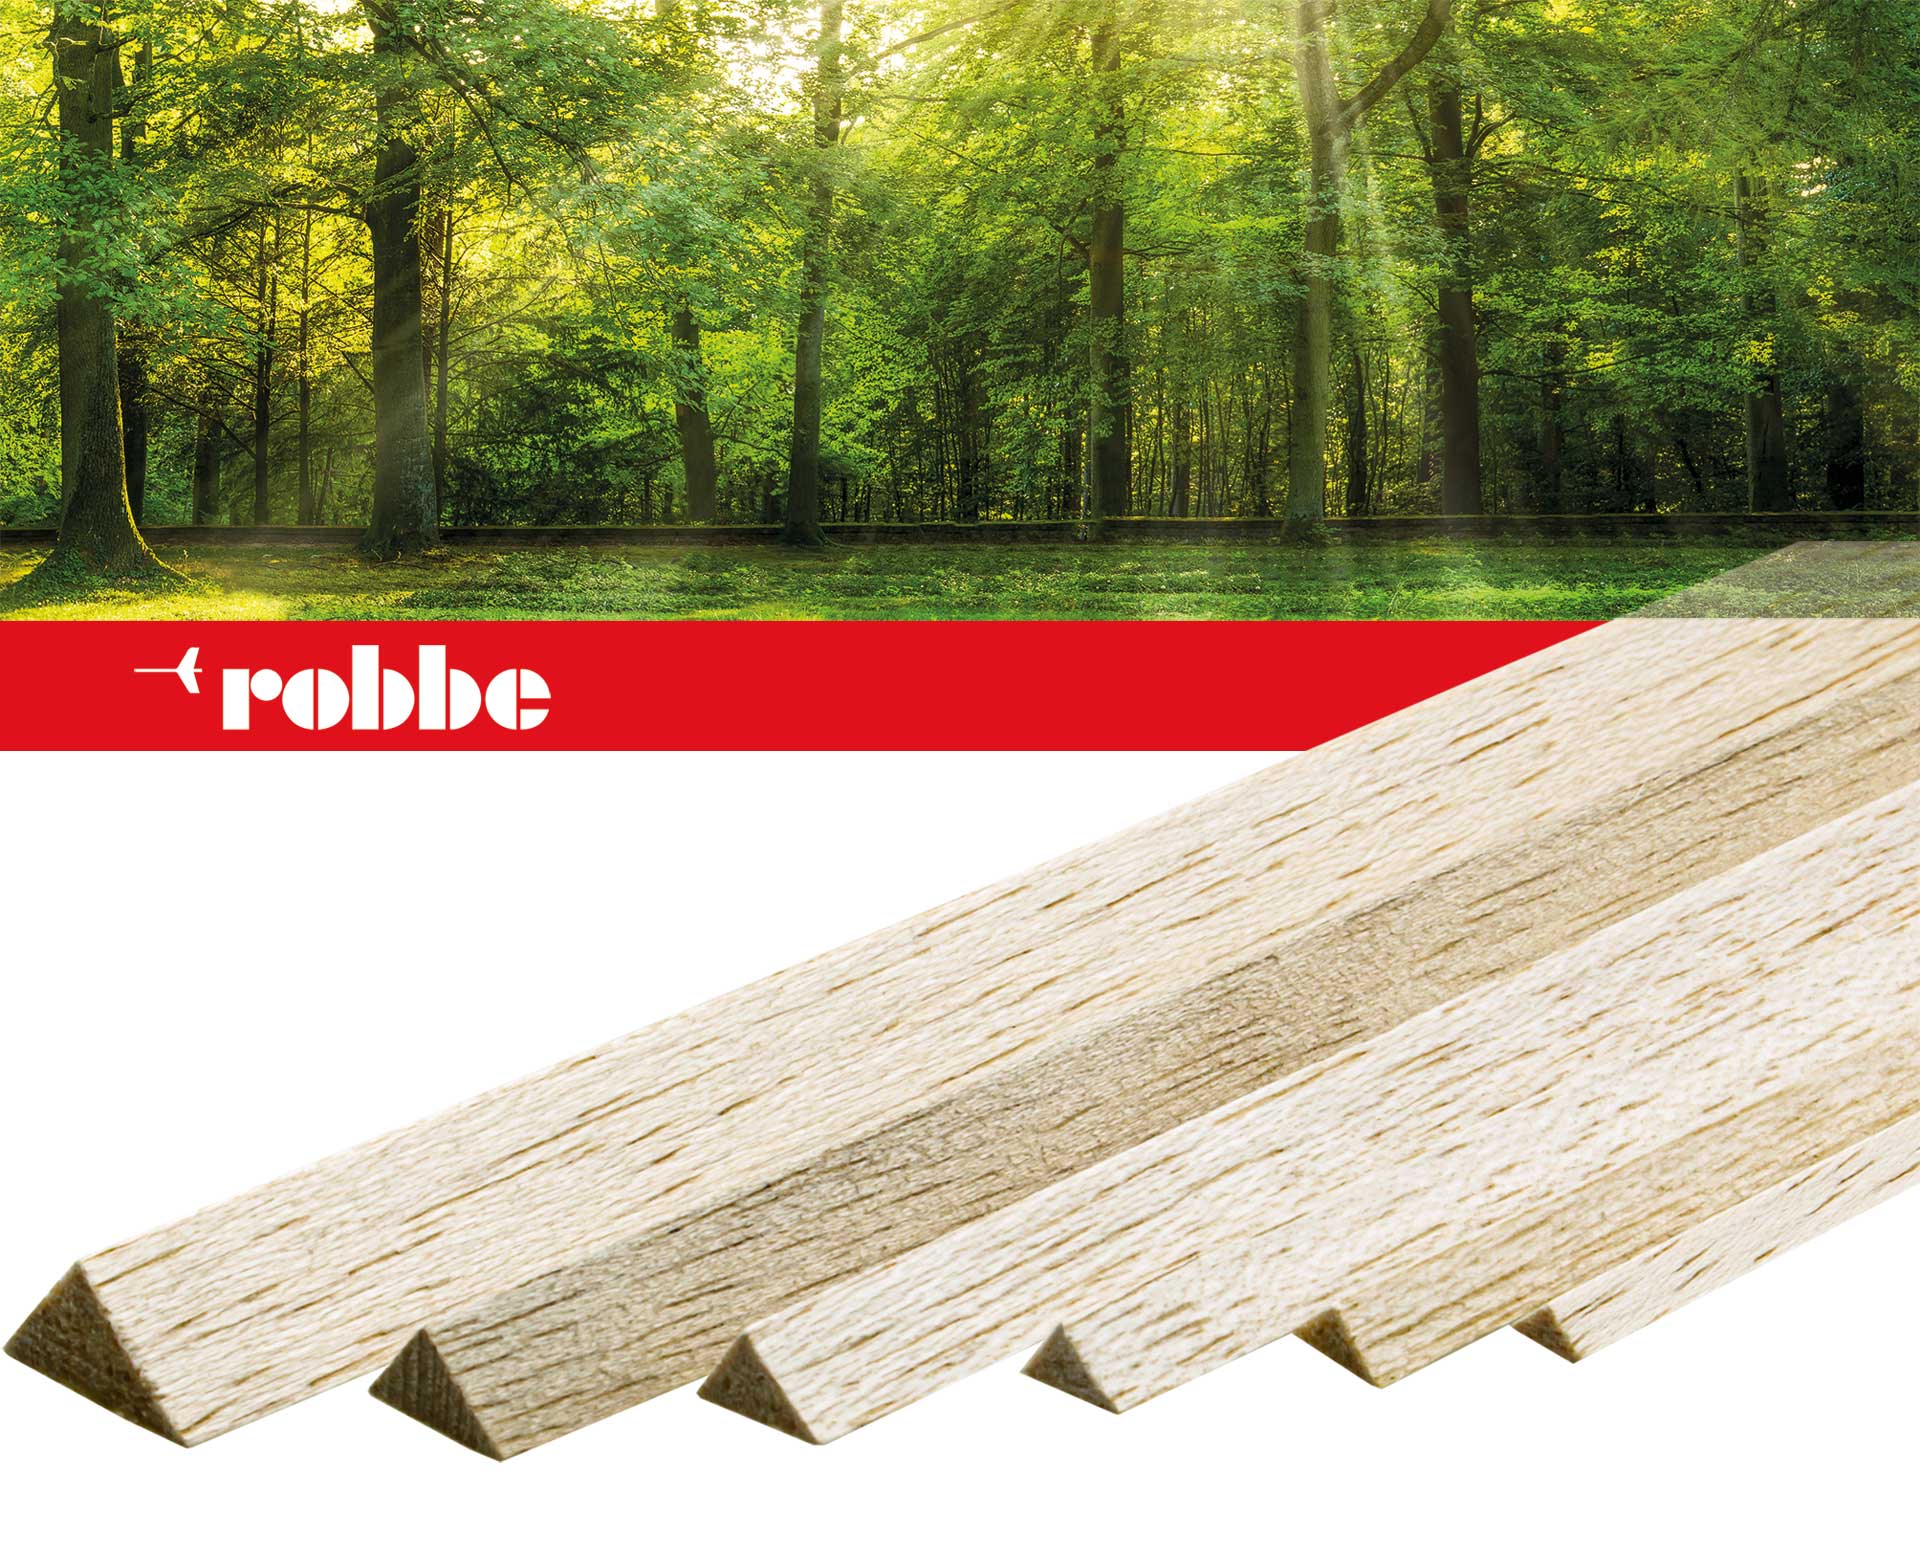 Robbe Modellsport Balsa triangular strip 5x5x1000mm